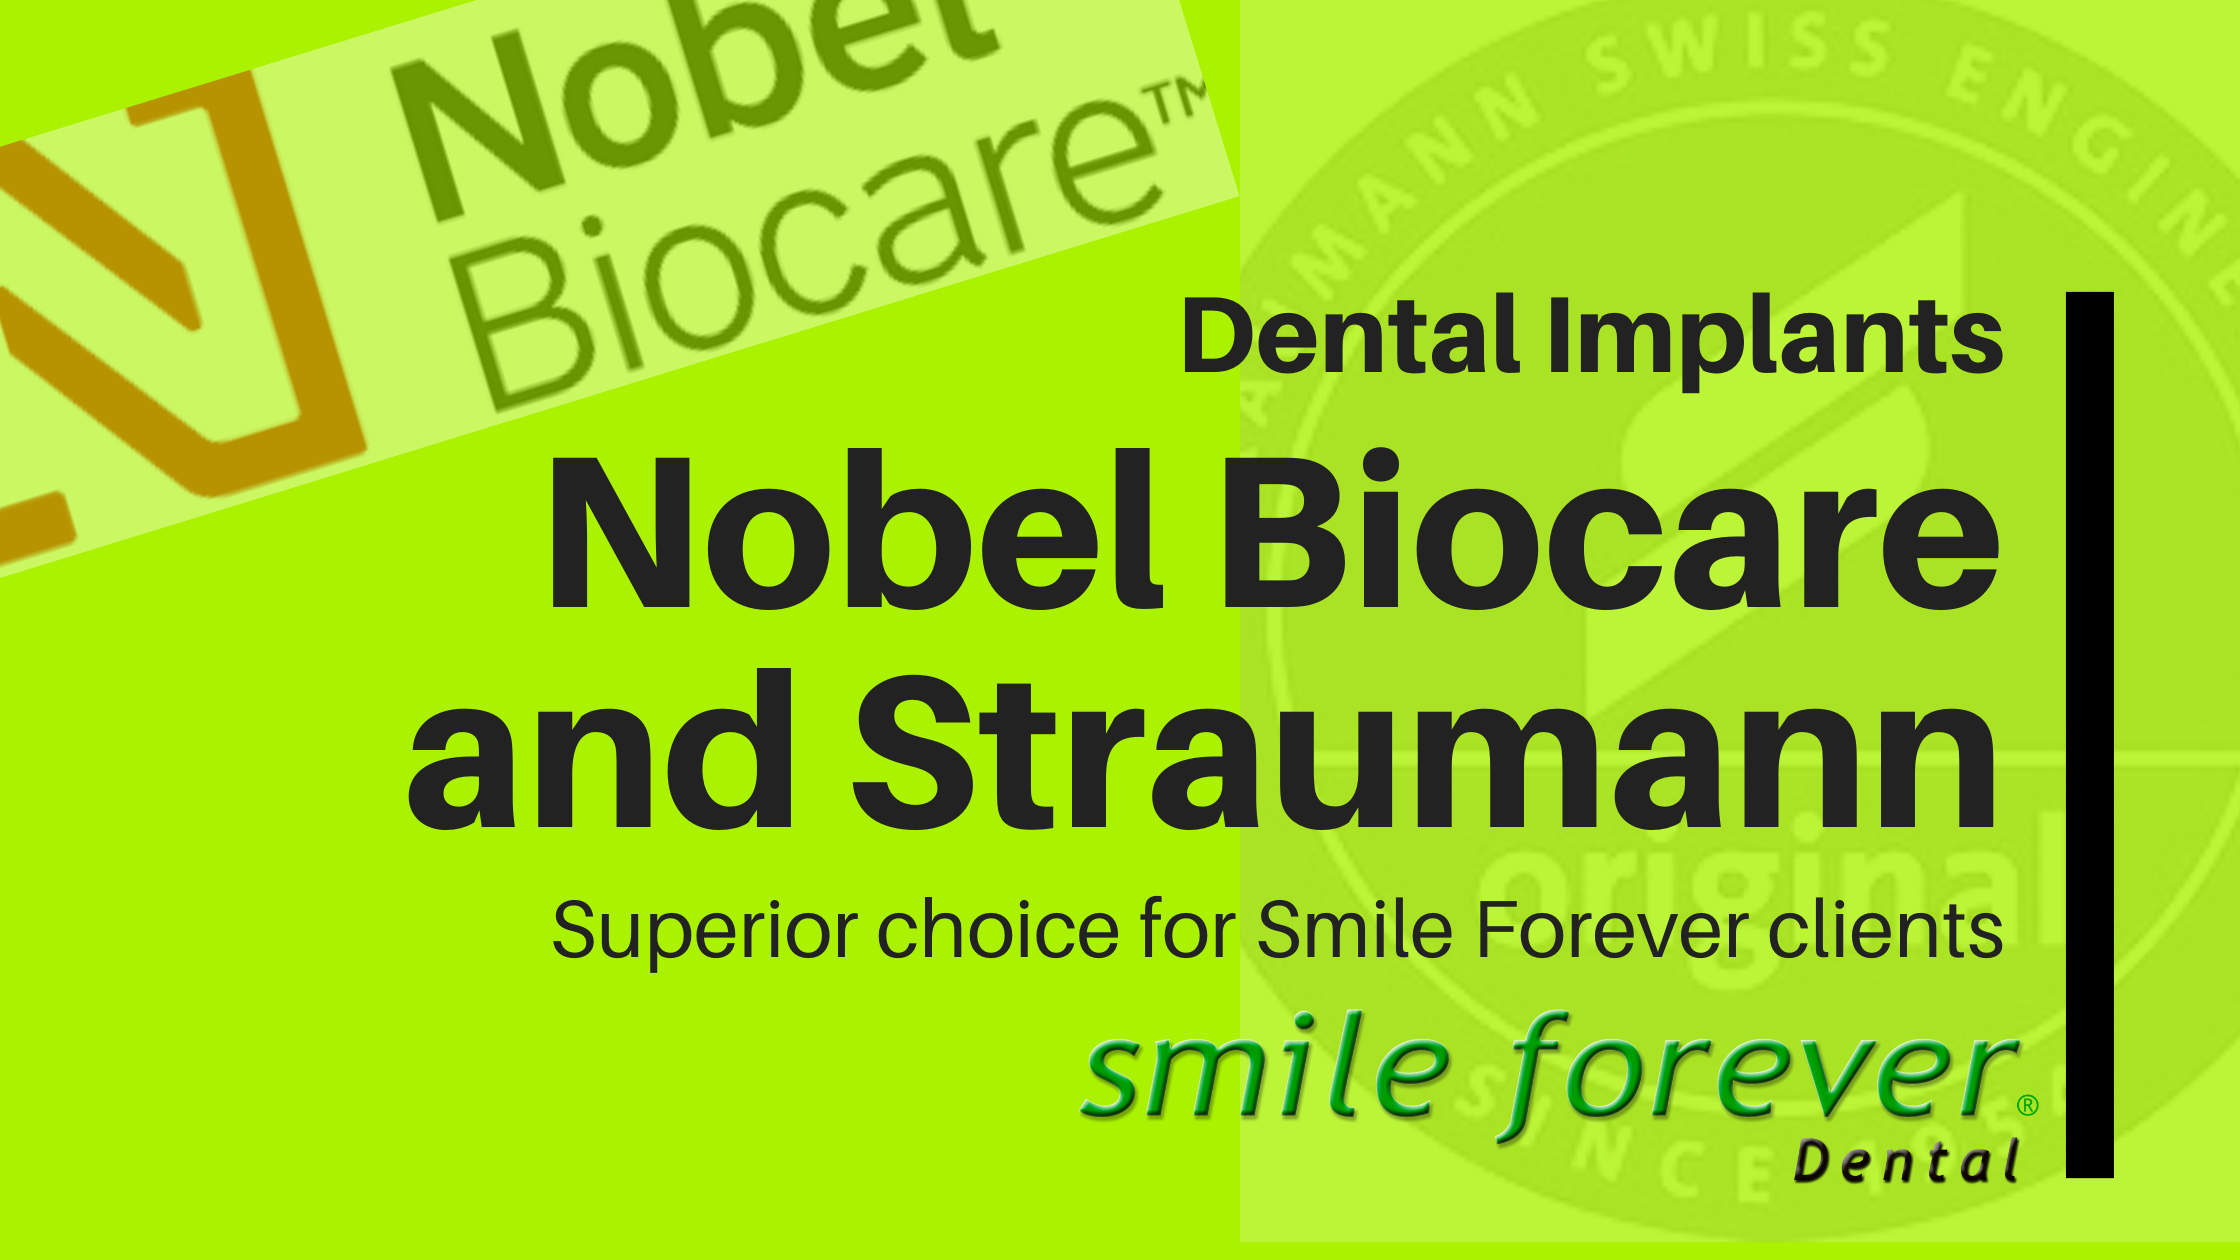 Best Dental Implant Brands Nobel Biocare and Straumann